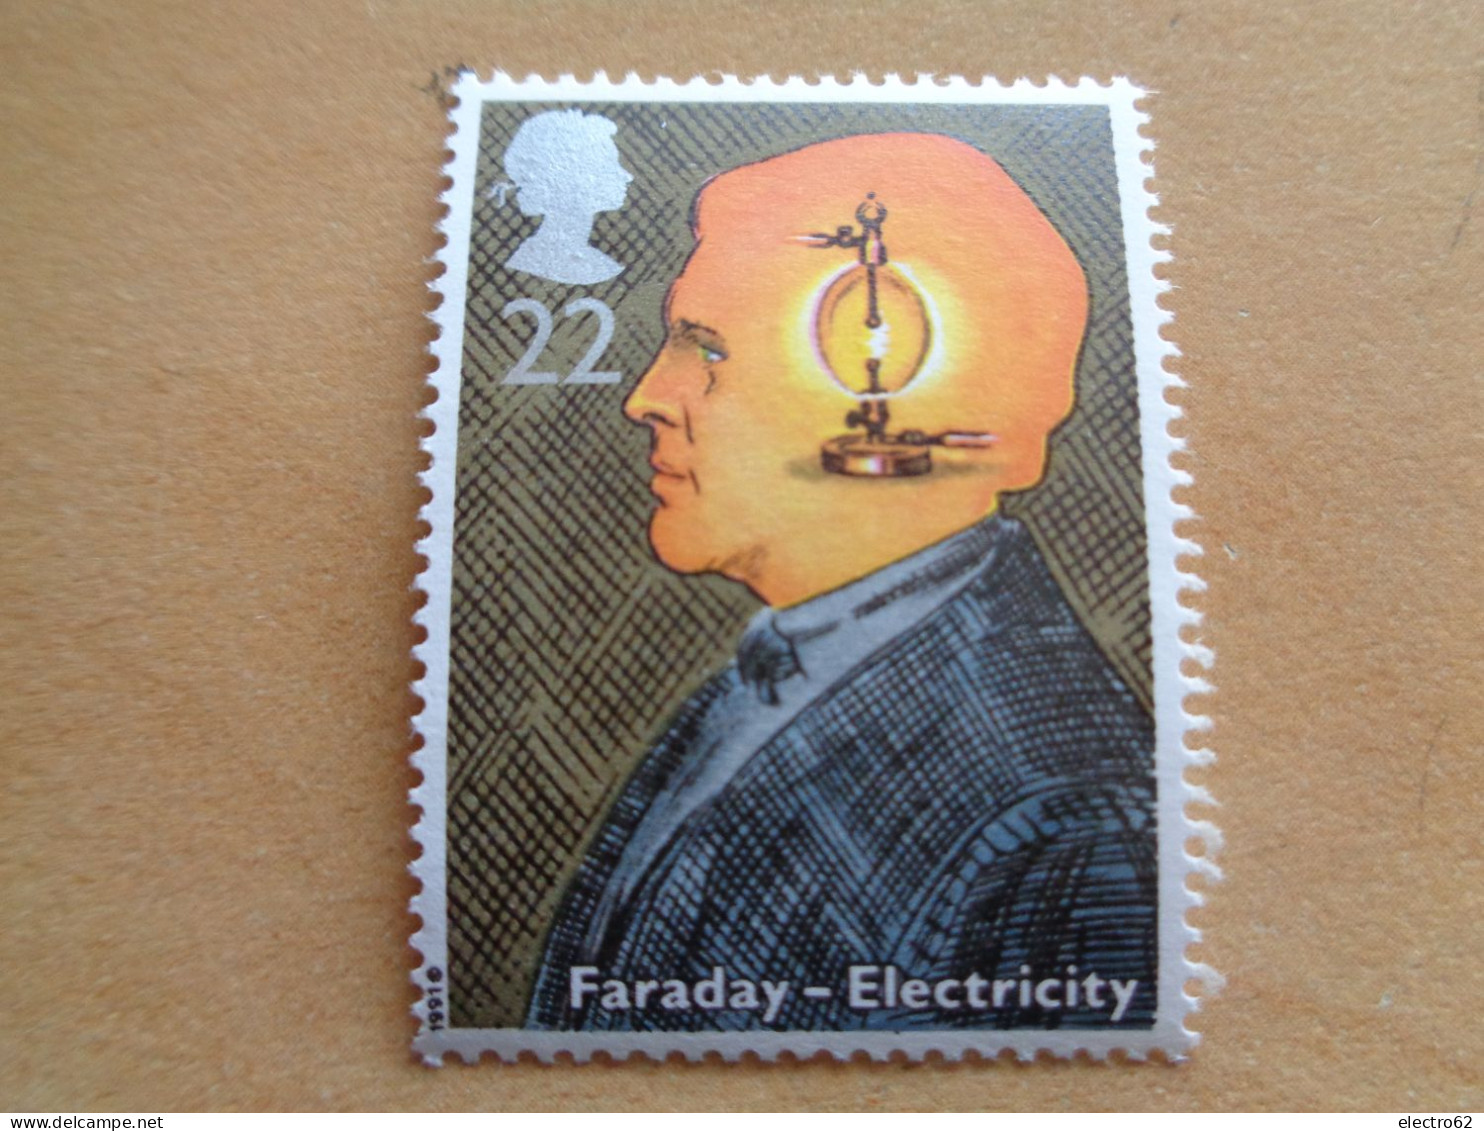 Grande Bretagne Great Britain Faraday électricité Electromagnétisme Electricity Großbitannien Brittannië 1991 Neuf - Elektrizität